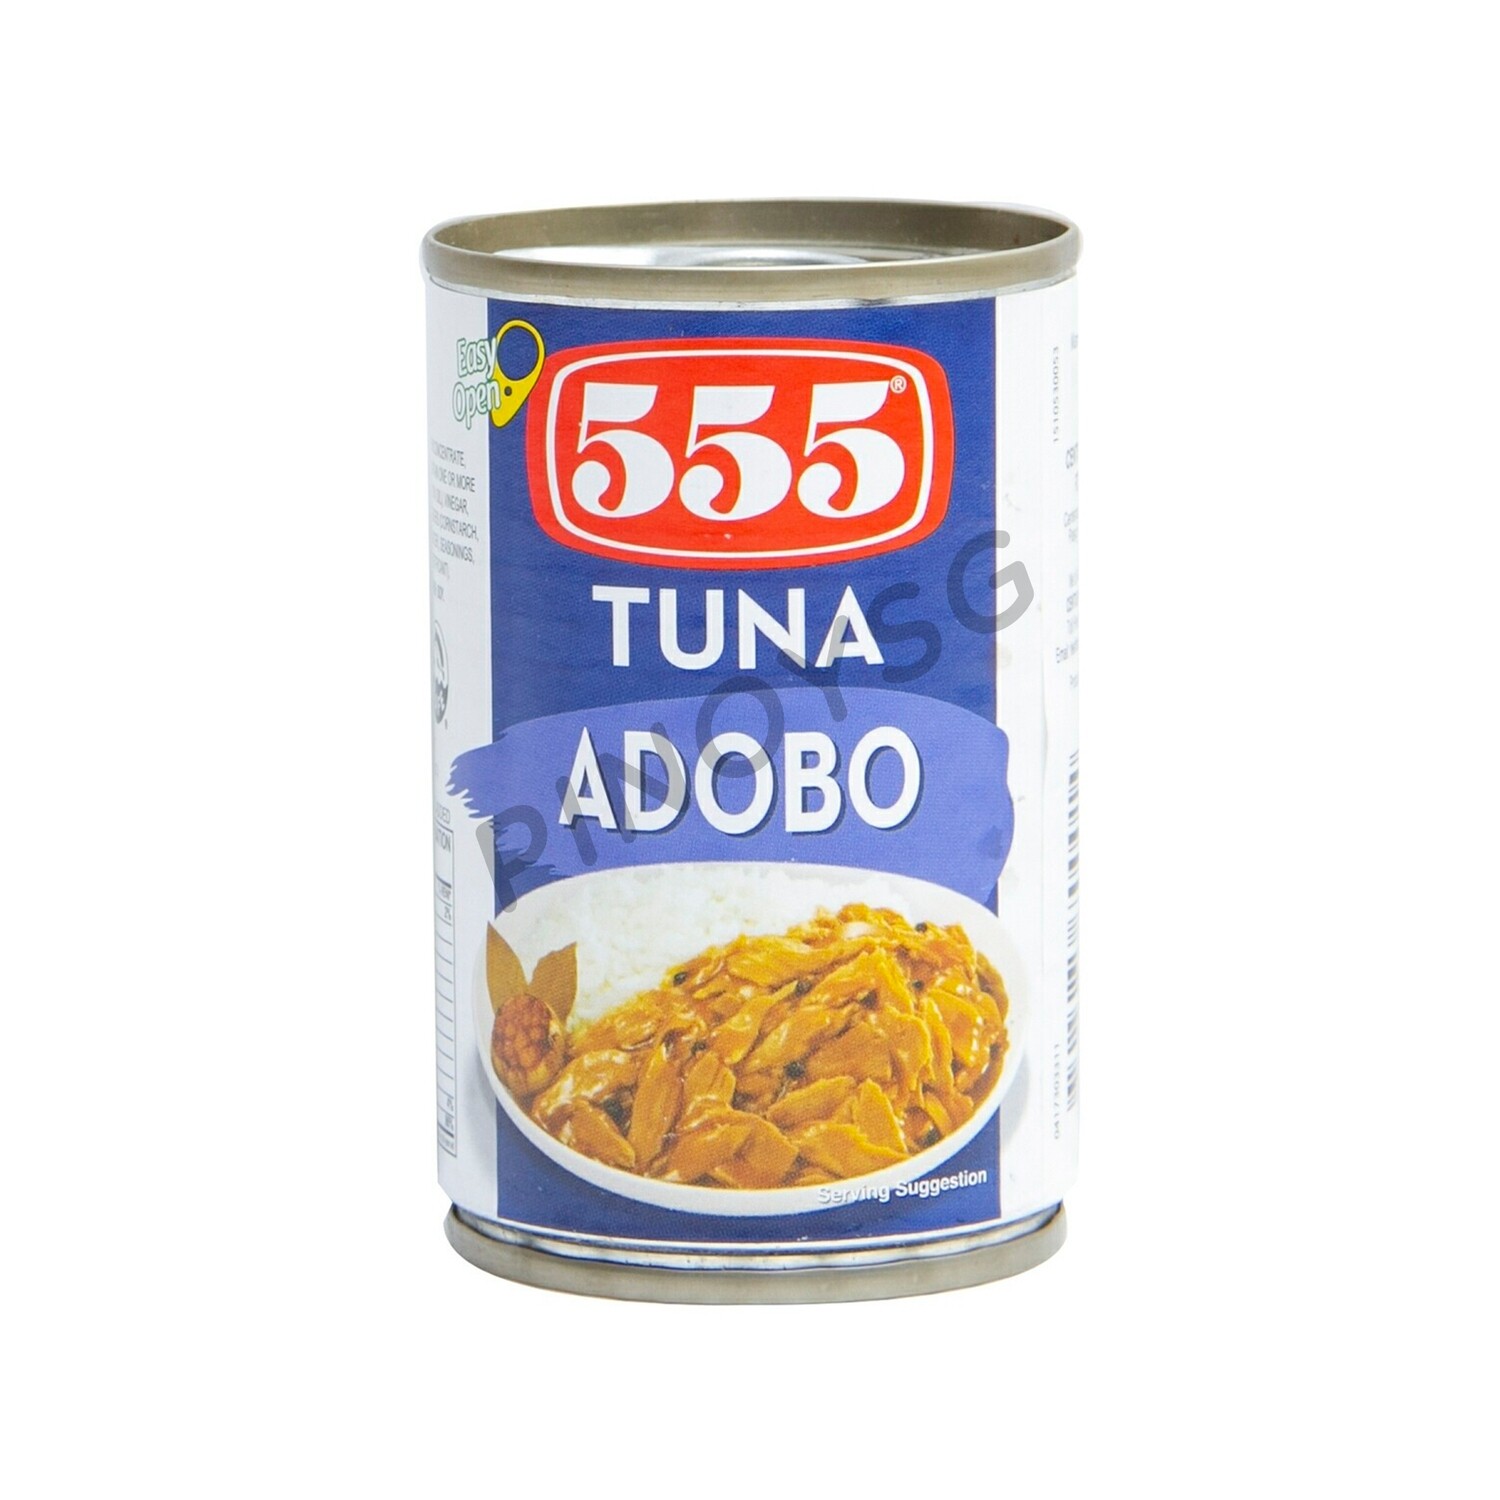 555 Tuna Adobo 155g 